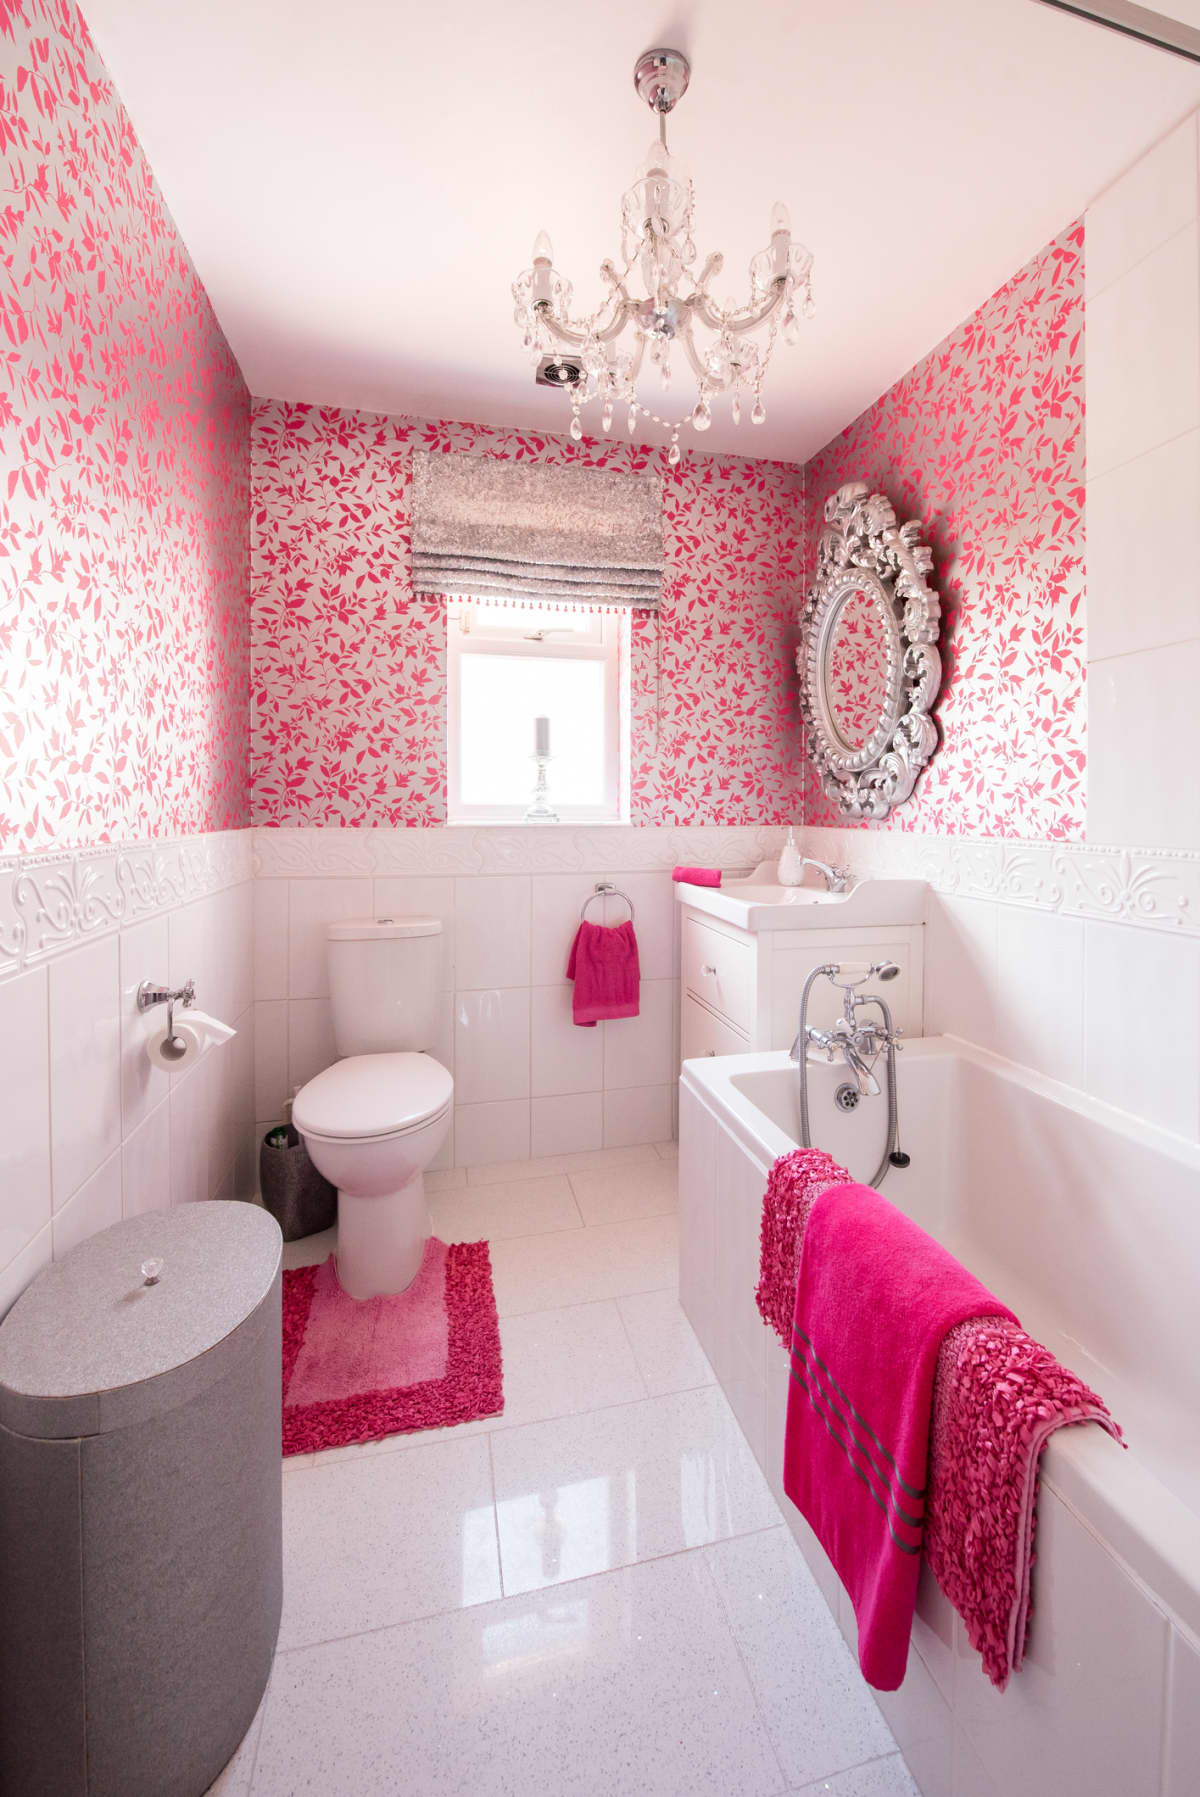 A pink decorative bathroom